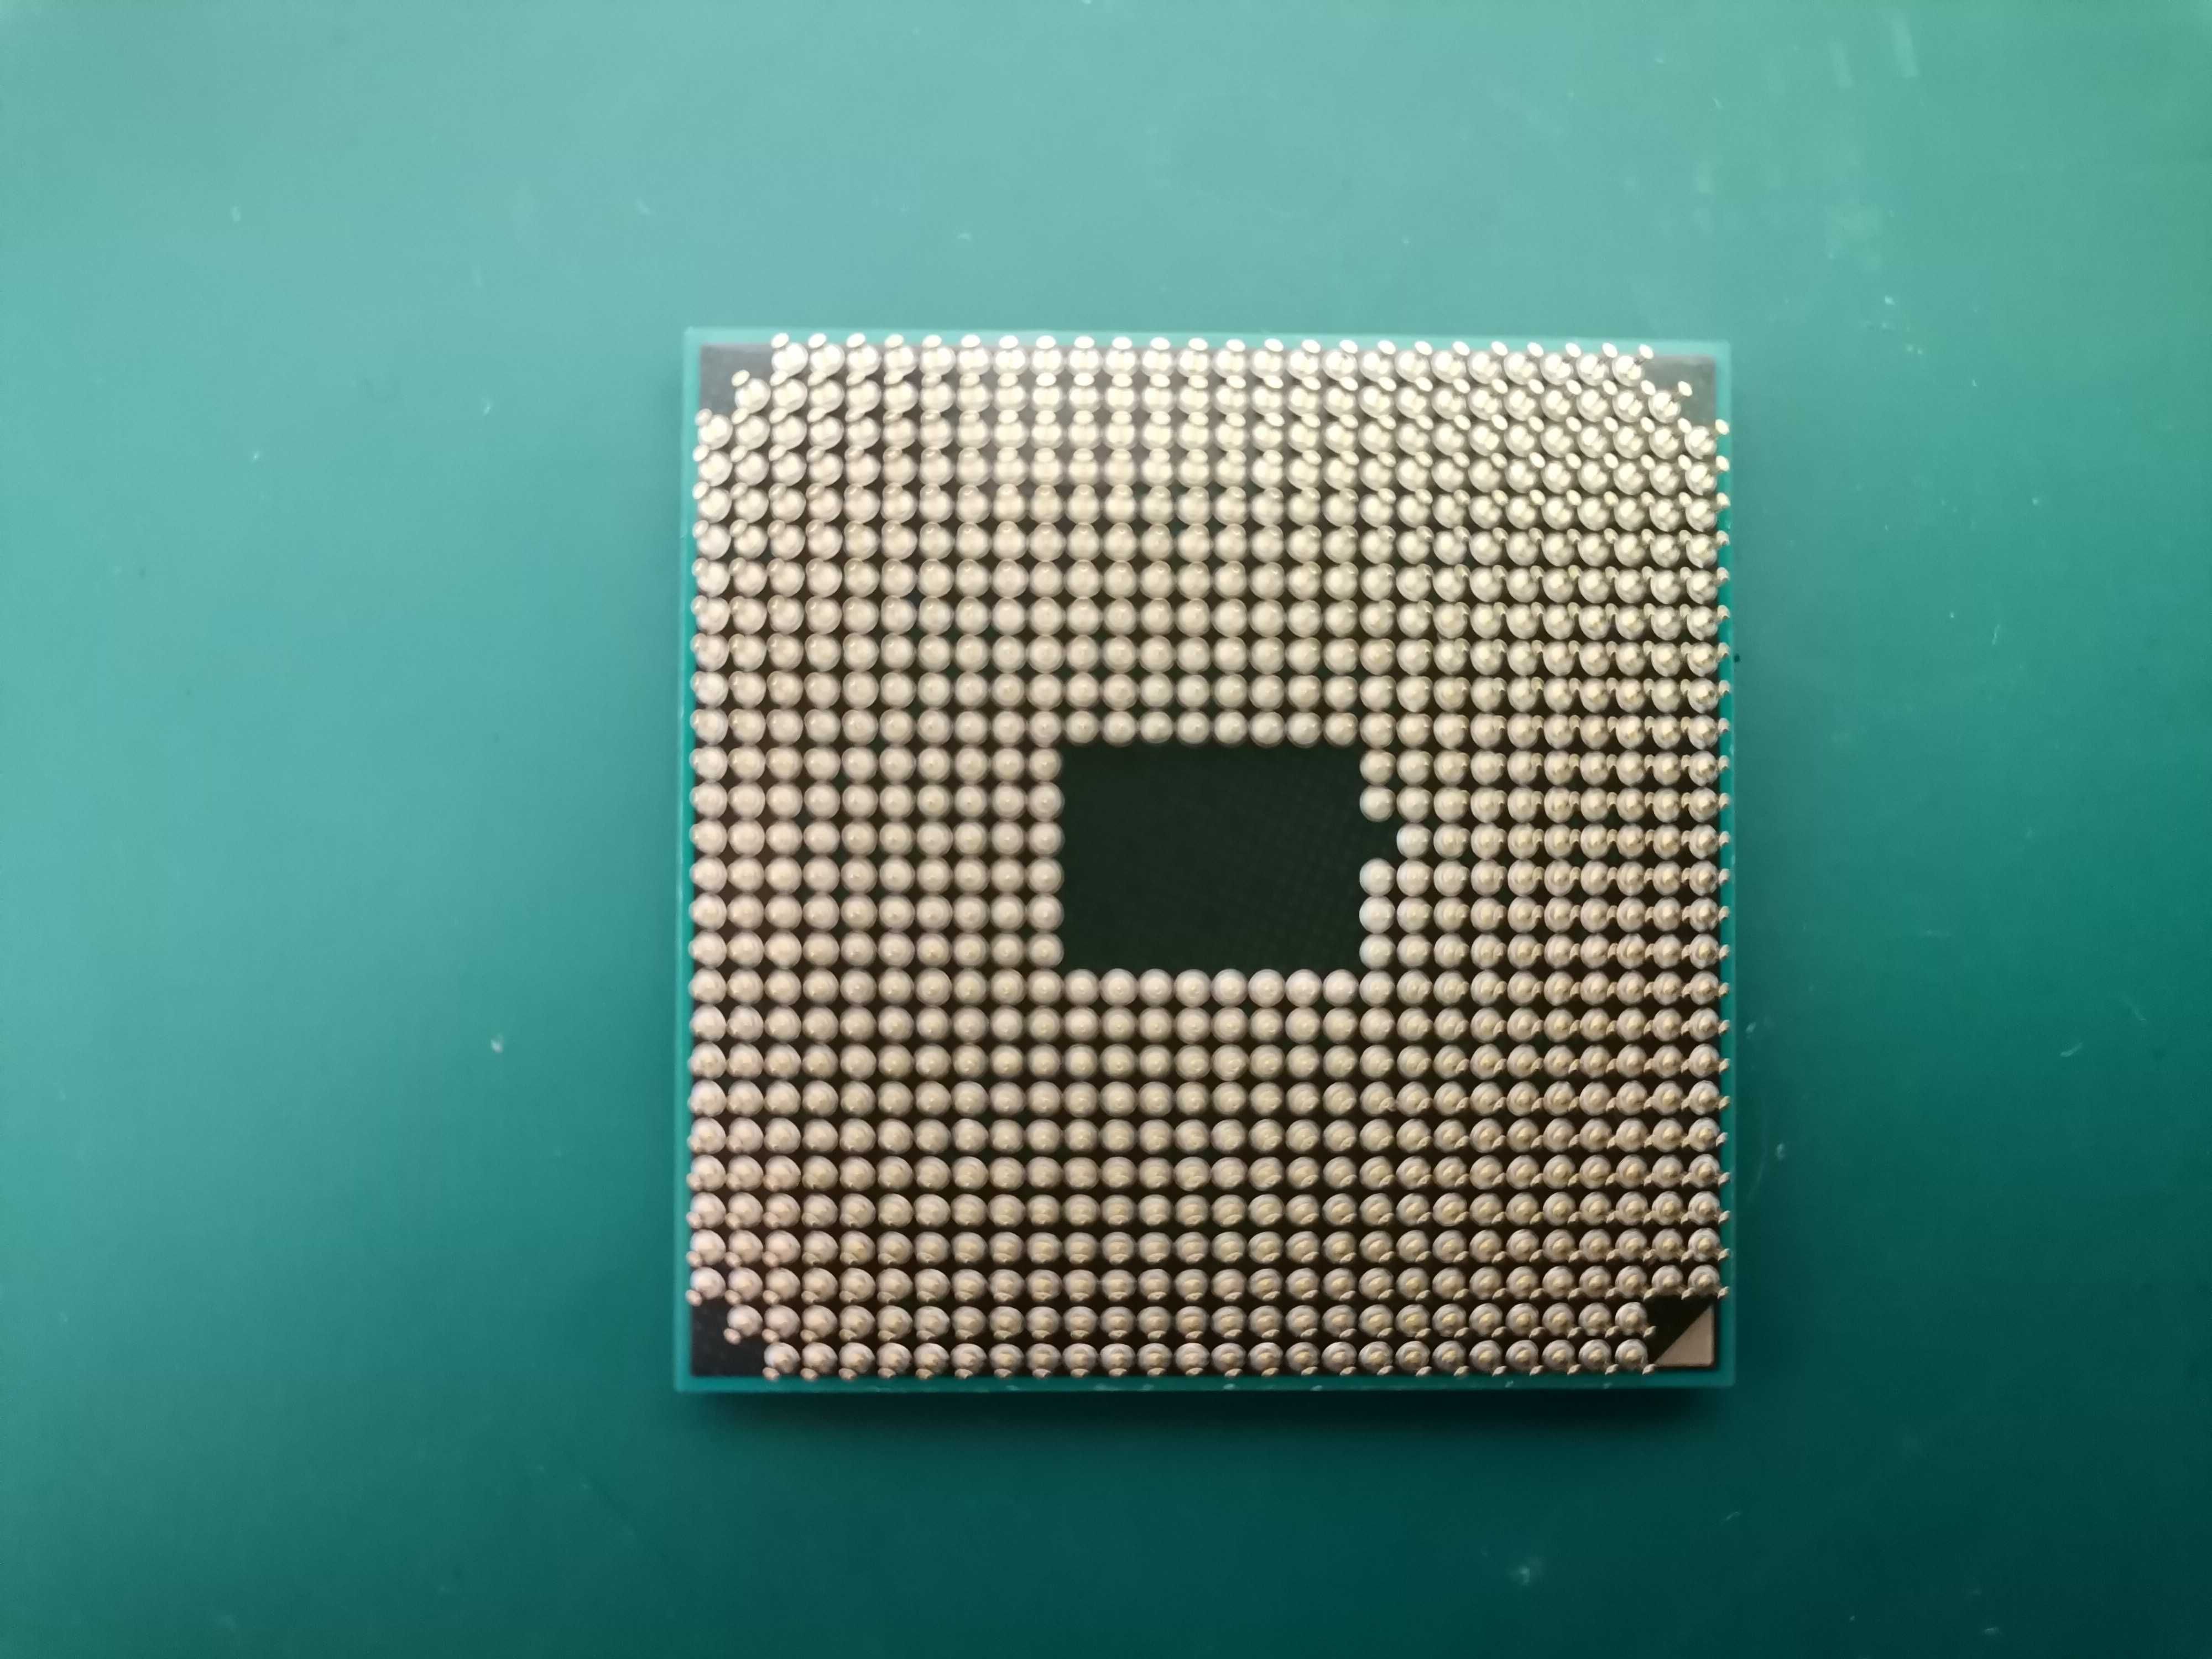 Procesor AMD A6-4400M hp pavilion g6